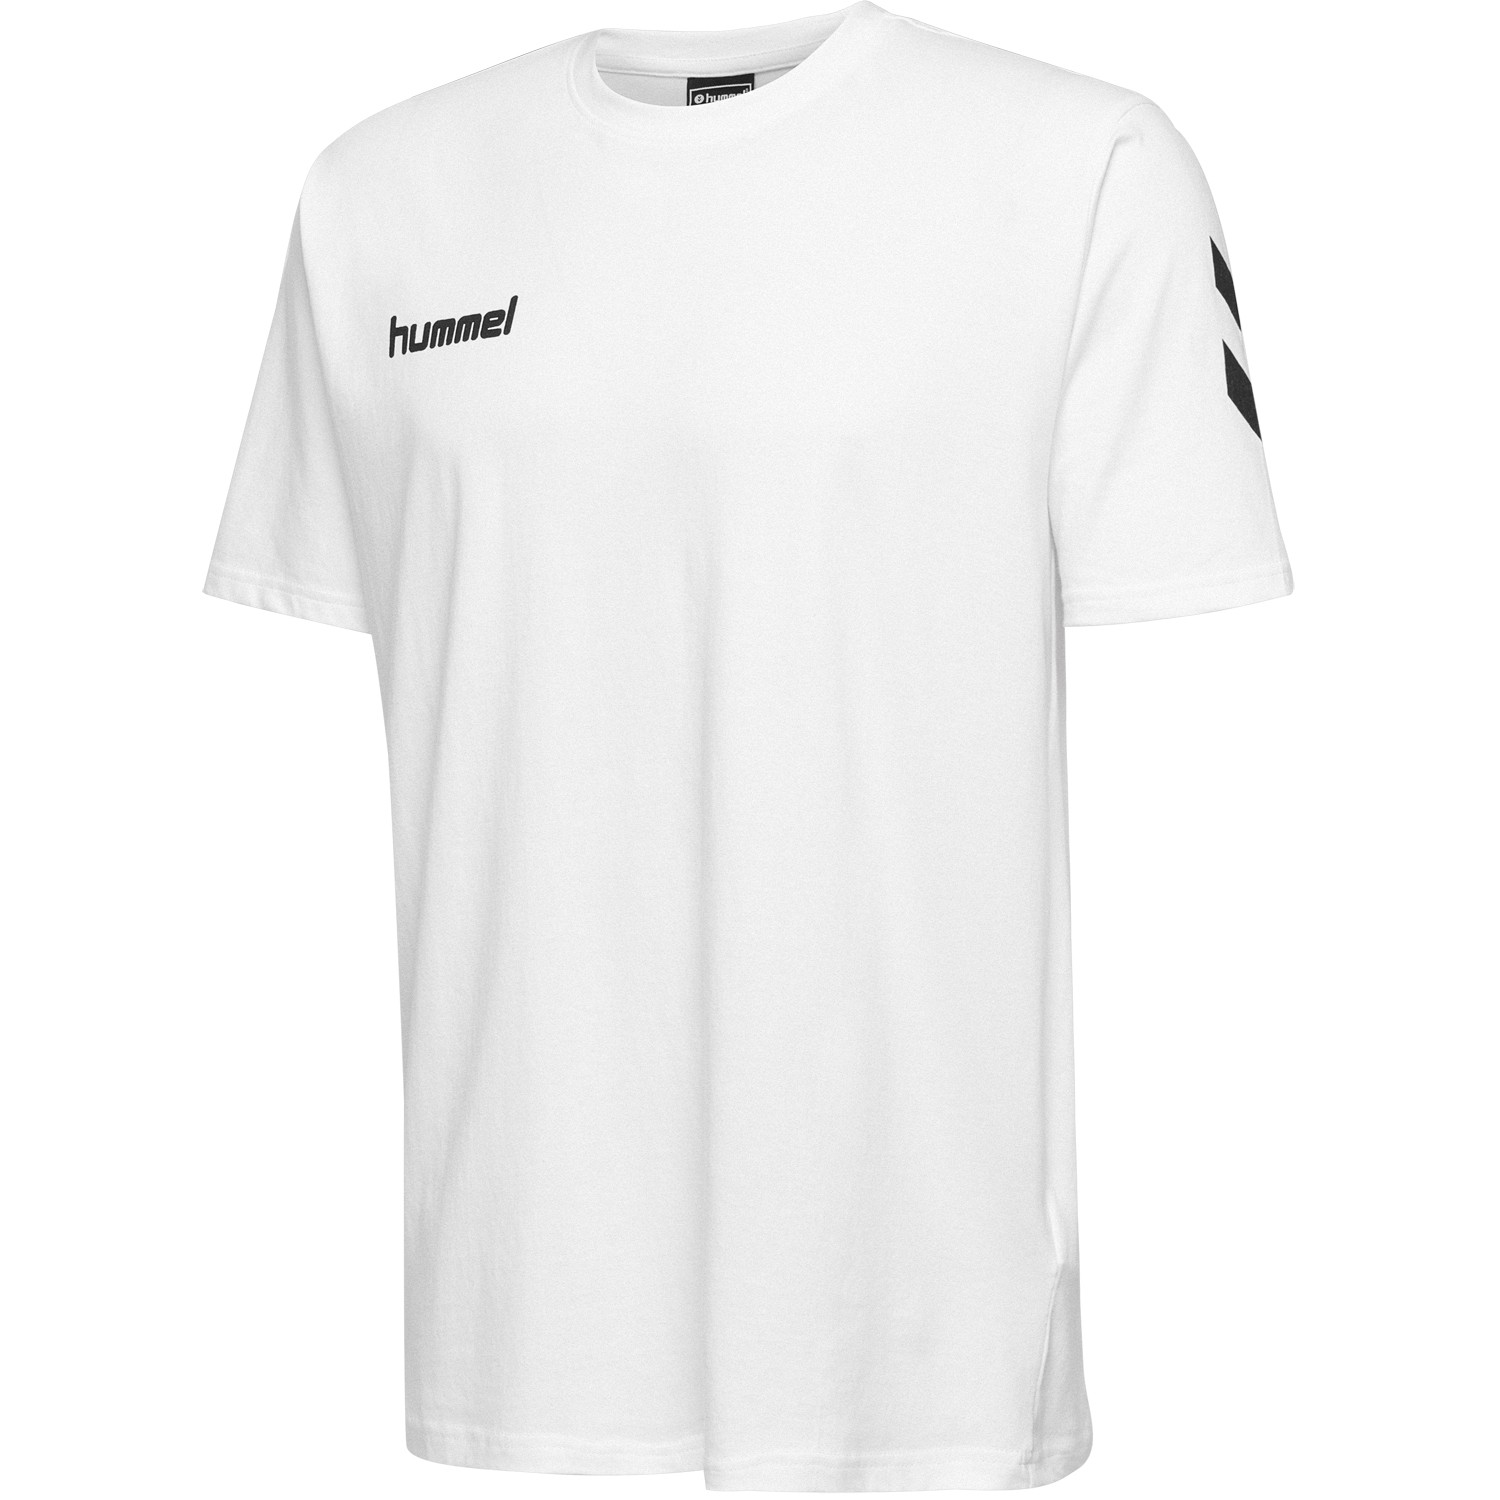 T-Shirts online Hummel - Hummel T-Shirts kaufen